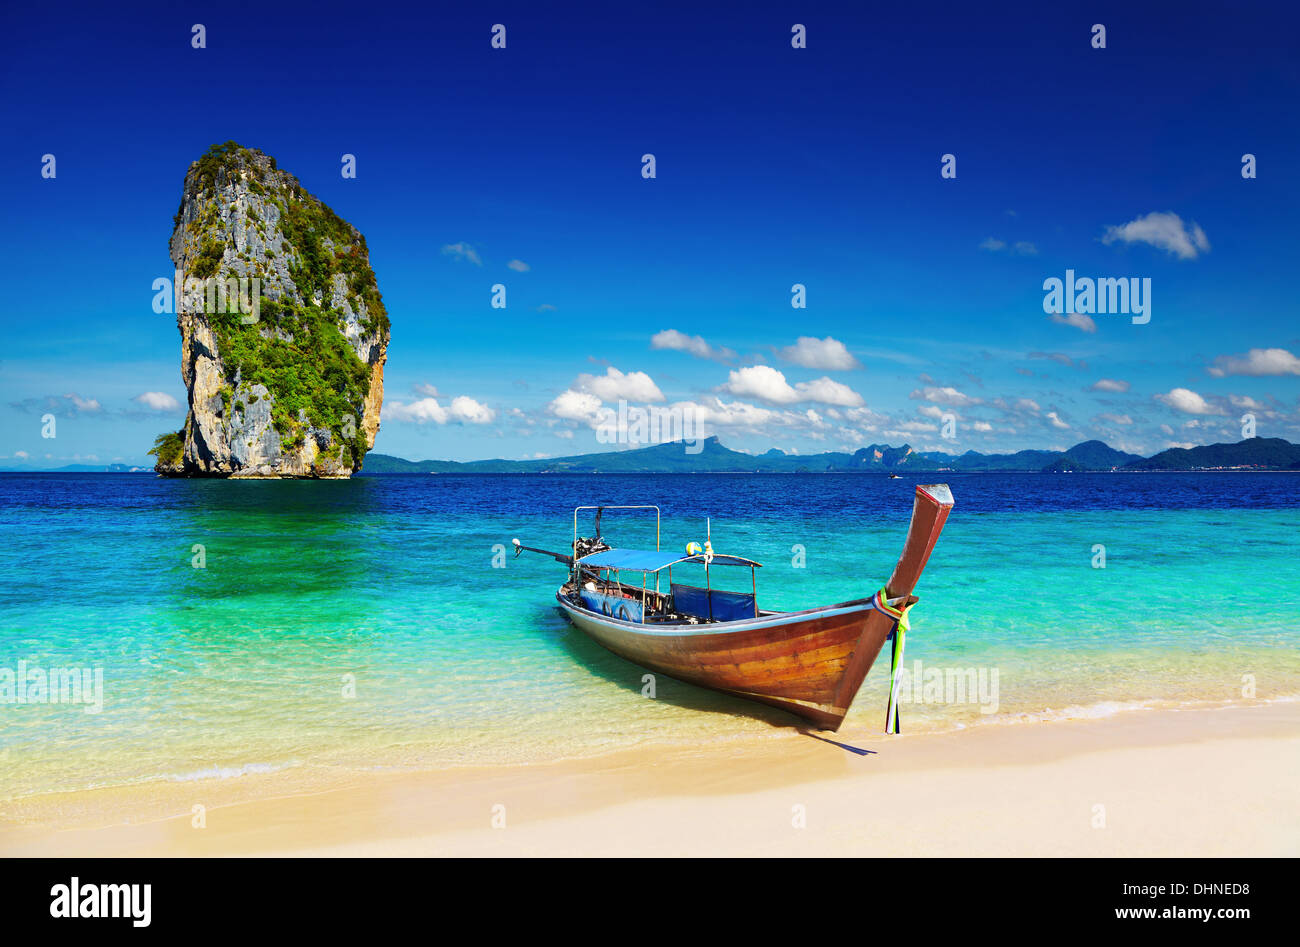 Long tail boat, Tropical beach, Andaman Sea, Thailand Stock Photo